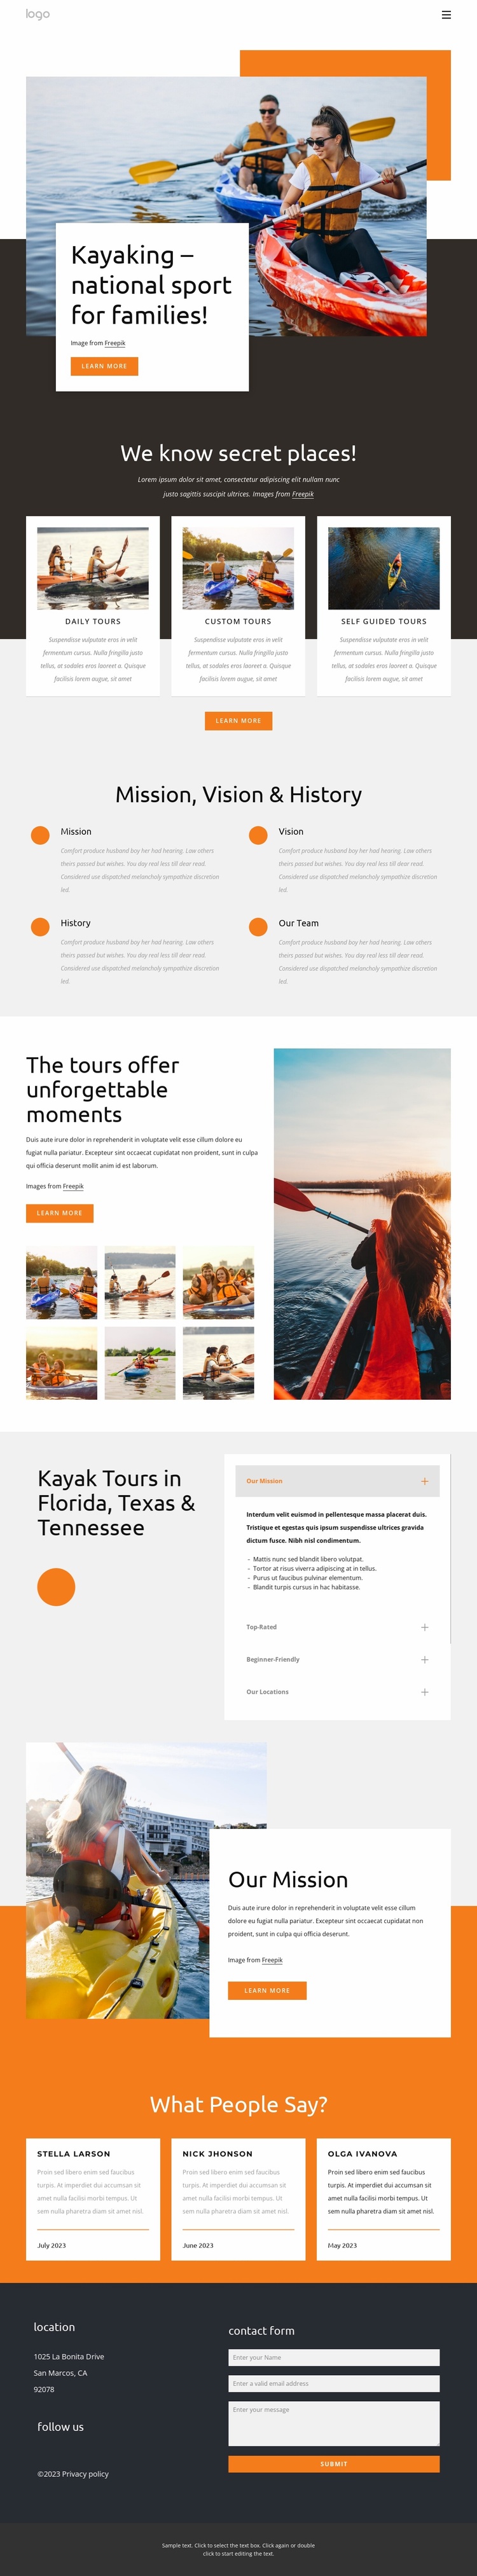 Kayaking - national sport for families eCommerce Website Design